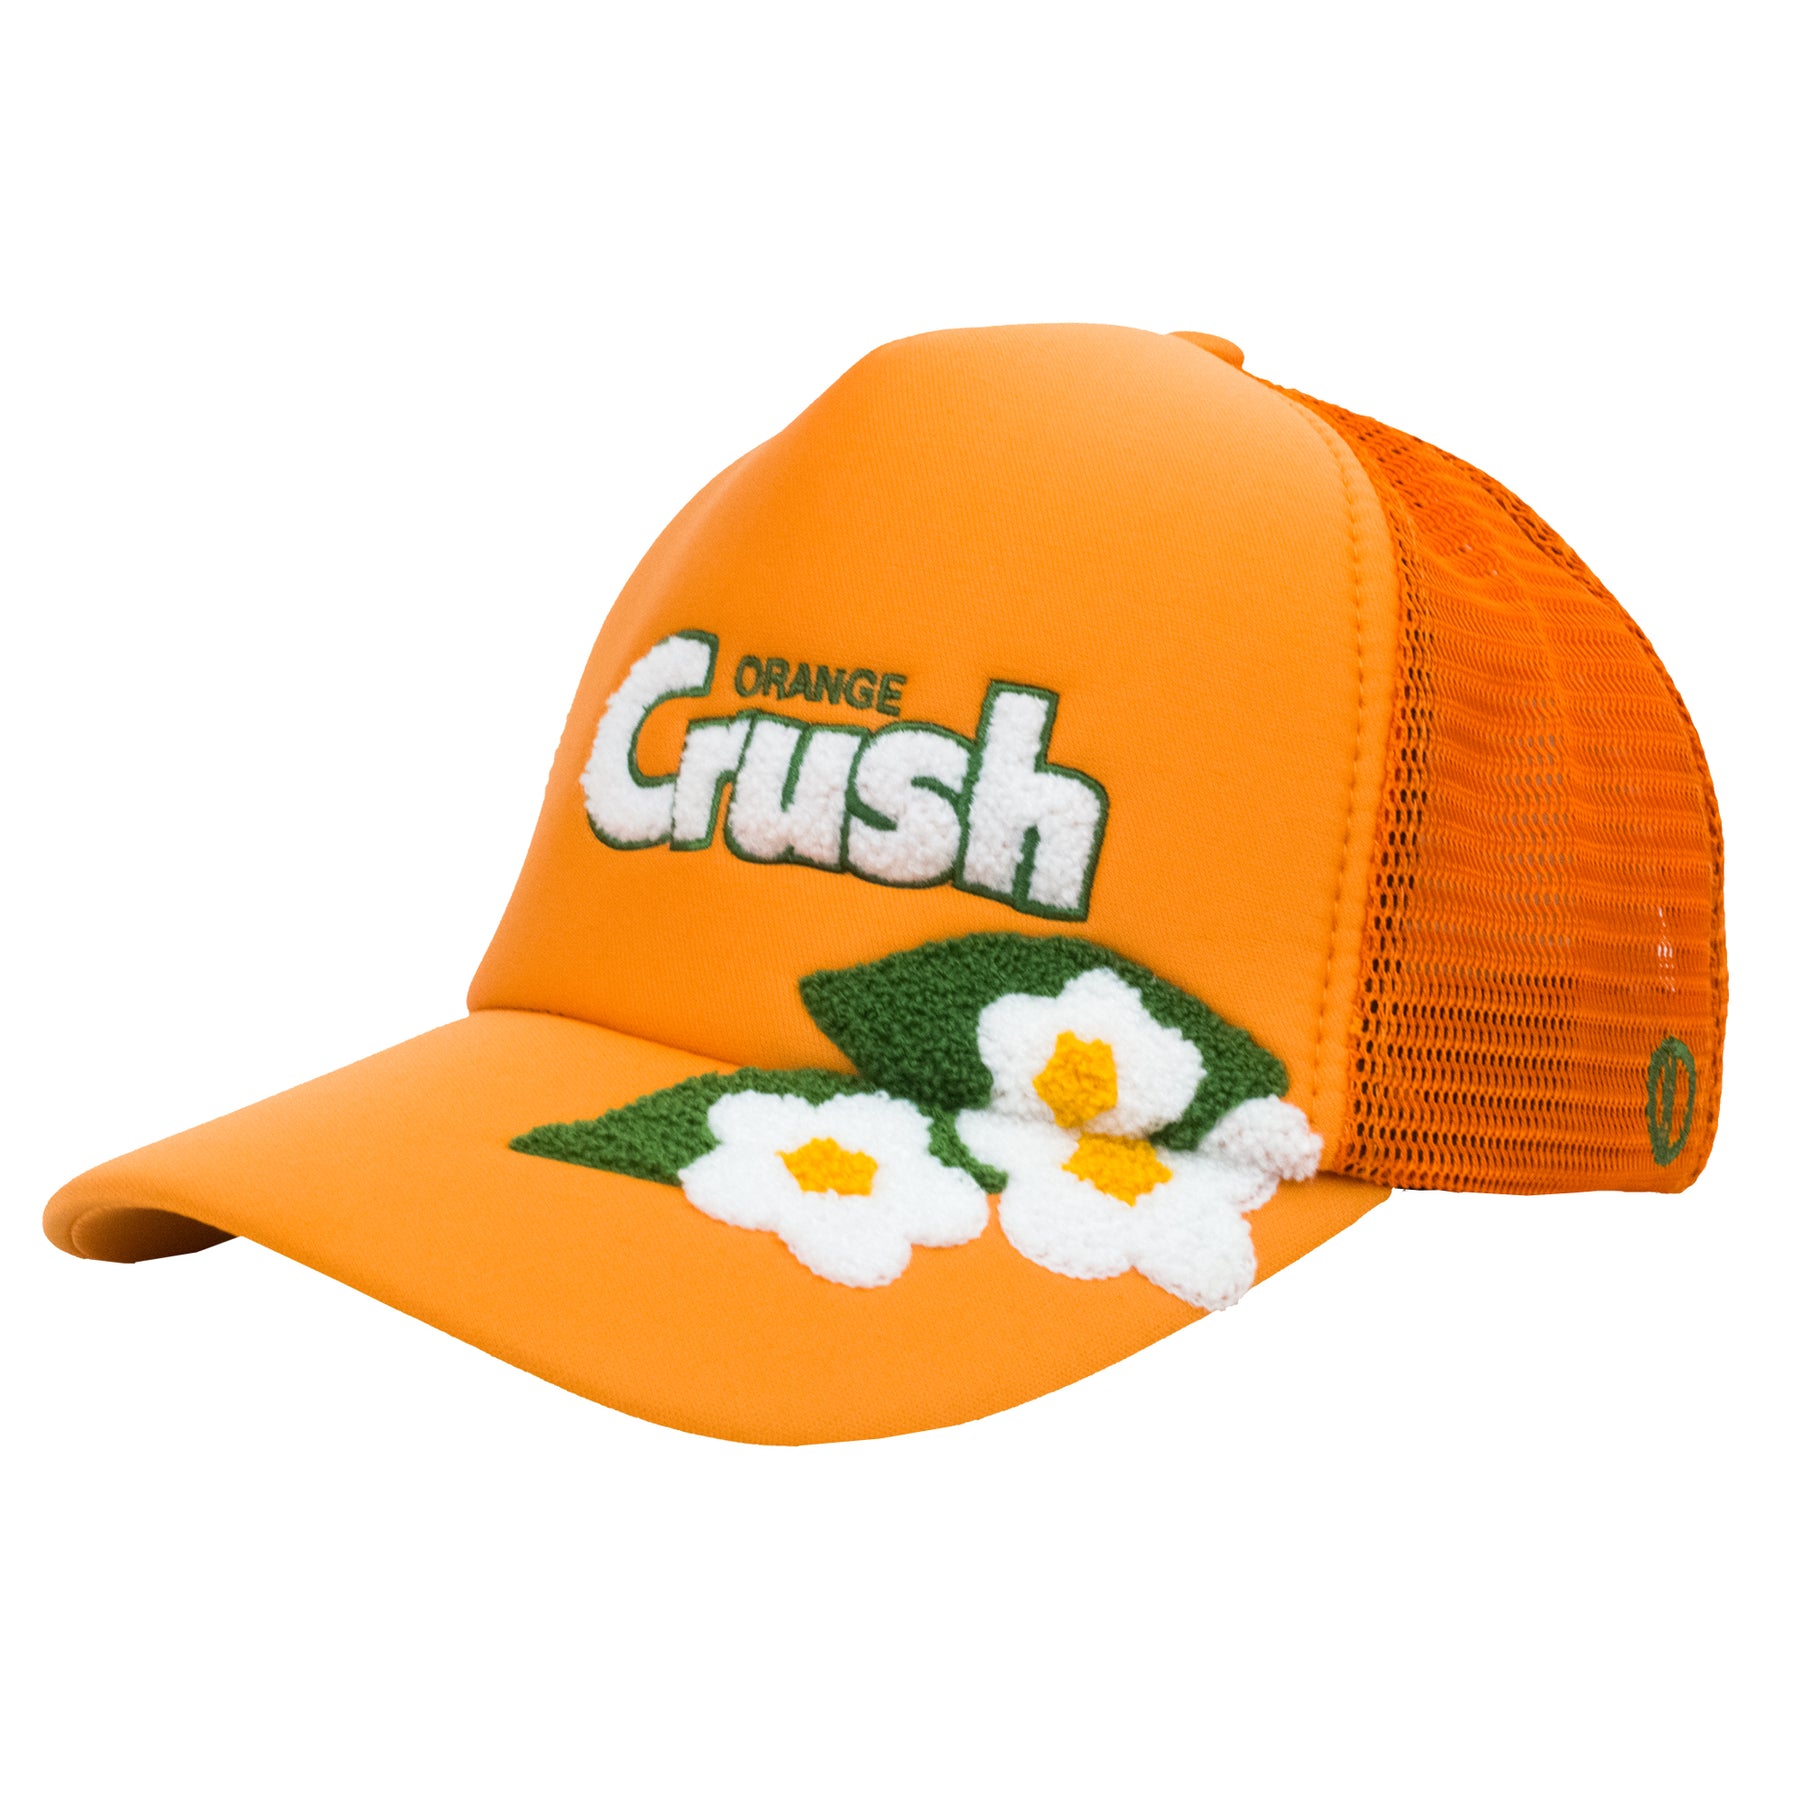 ODD Snap Orange Back Adjustable One Logo, Sox, Orange Crush Trucker – Hat, Soda Odd SOX Size